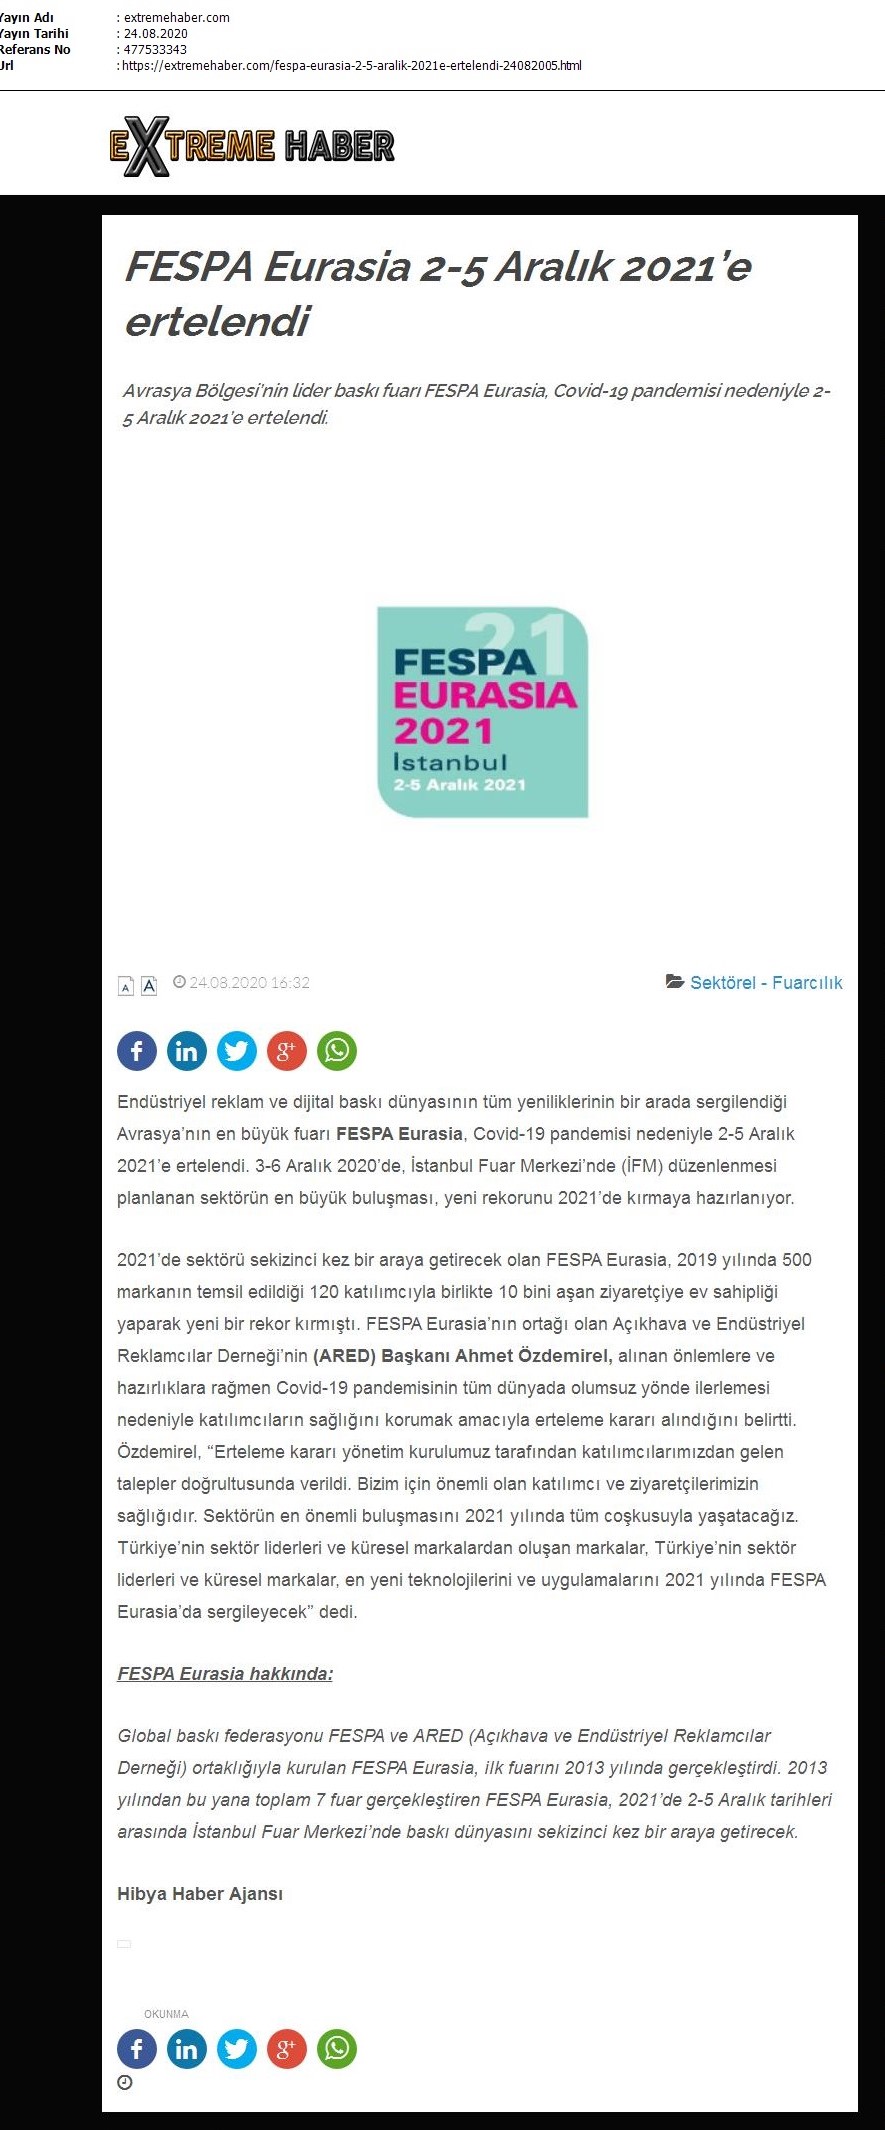 FESPA Eurasia 2-5 Aralık 2021’e ertelendi